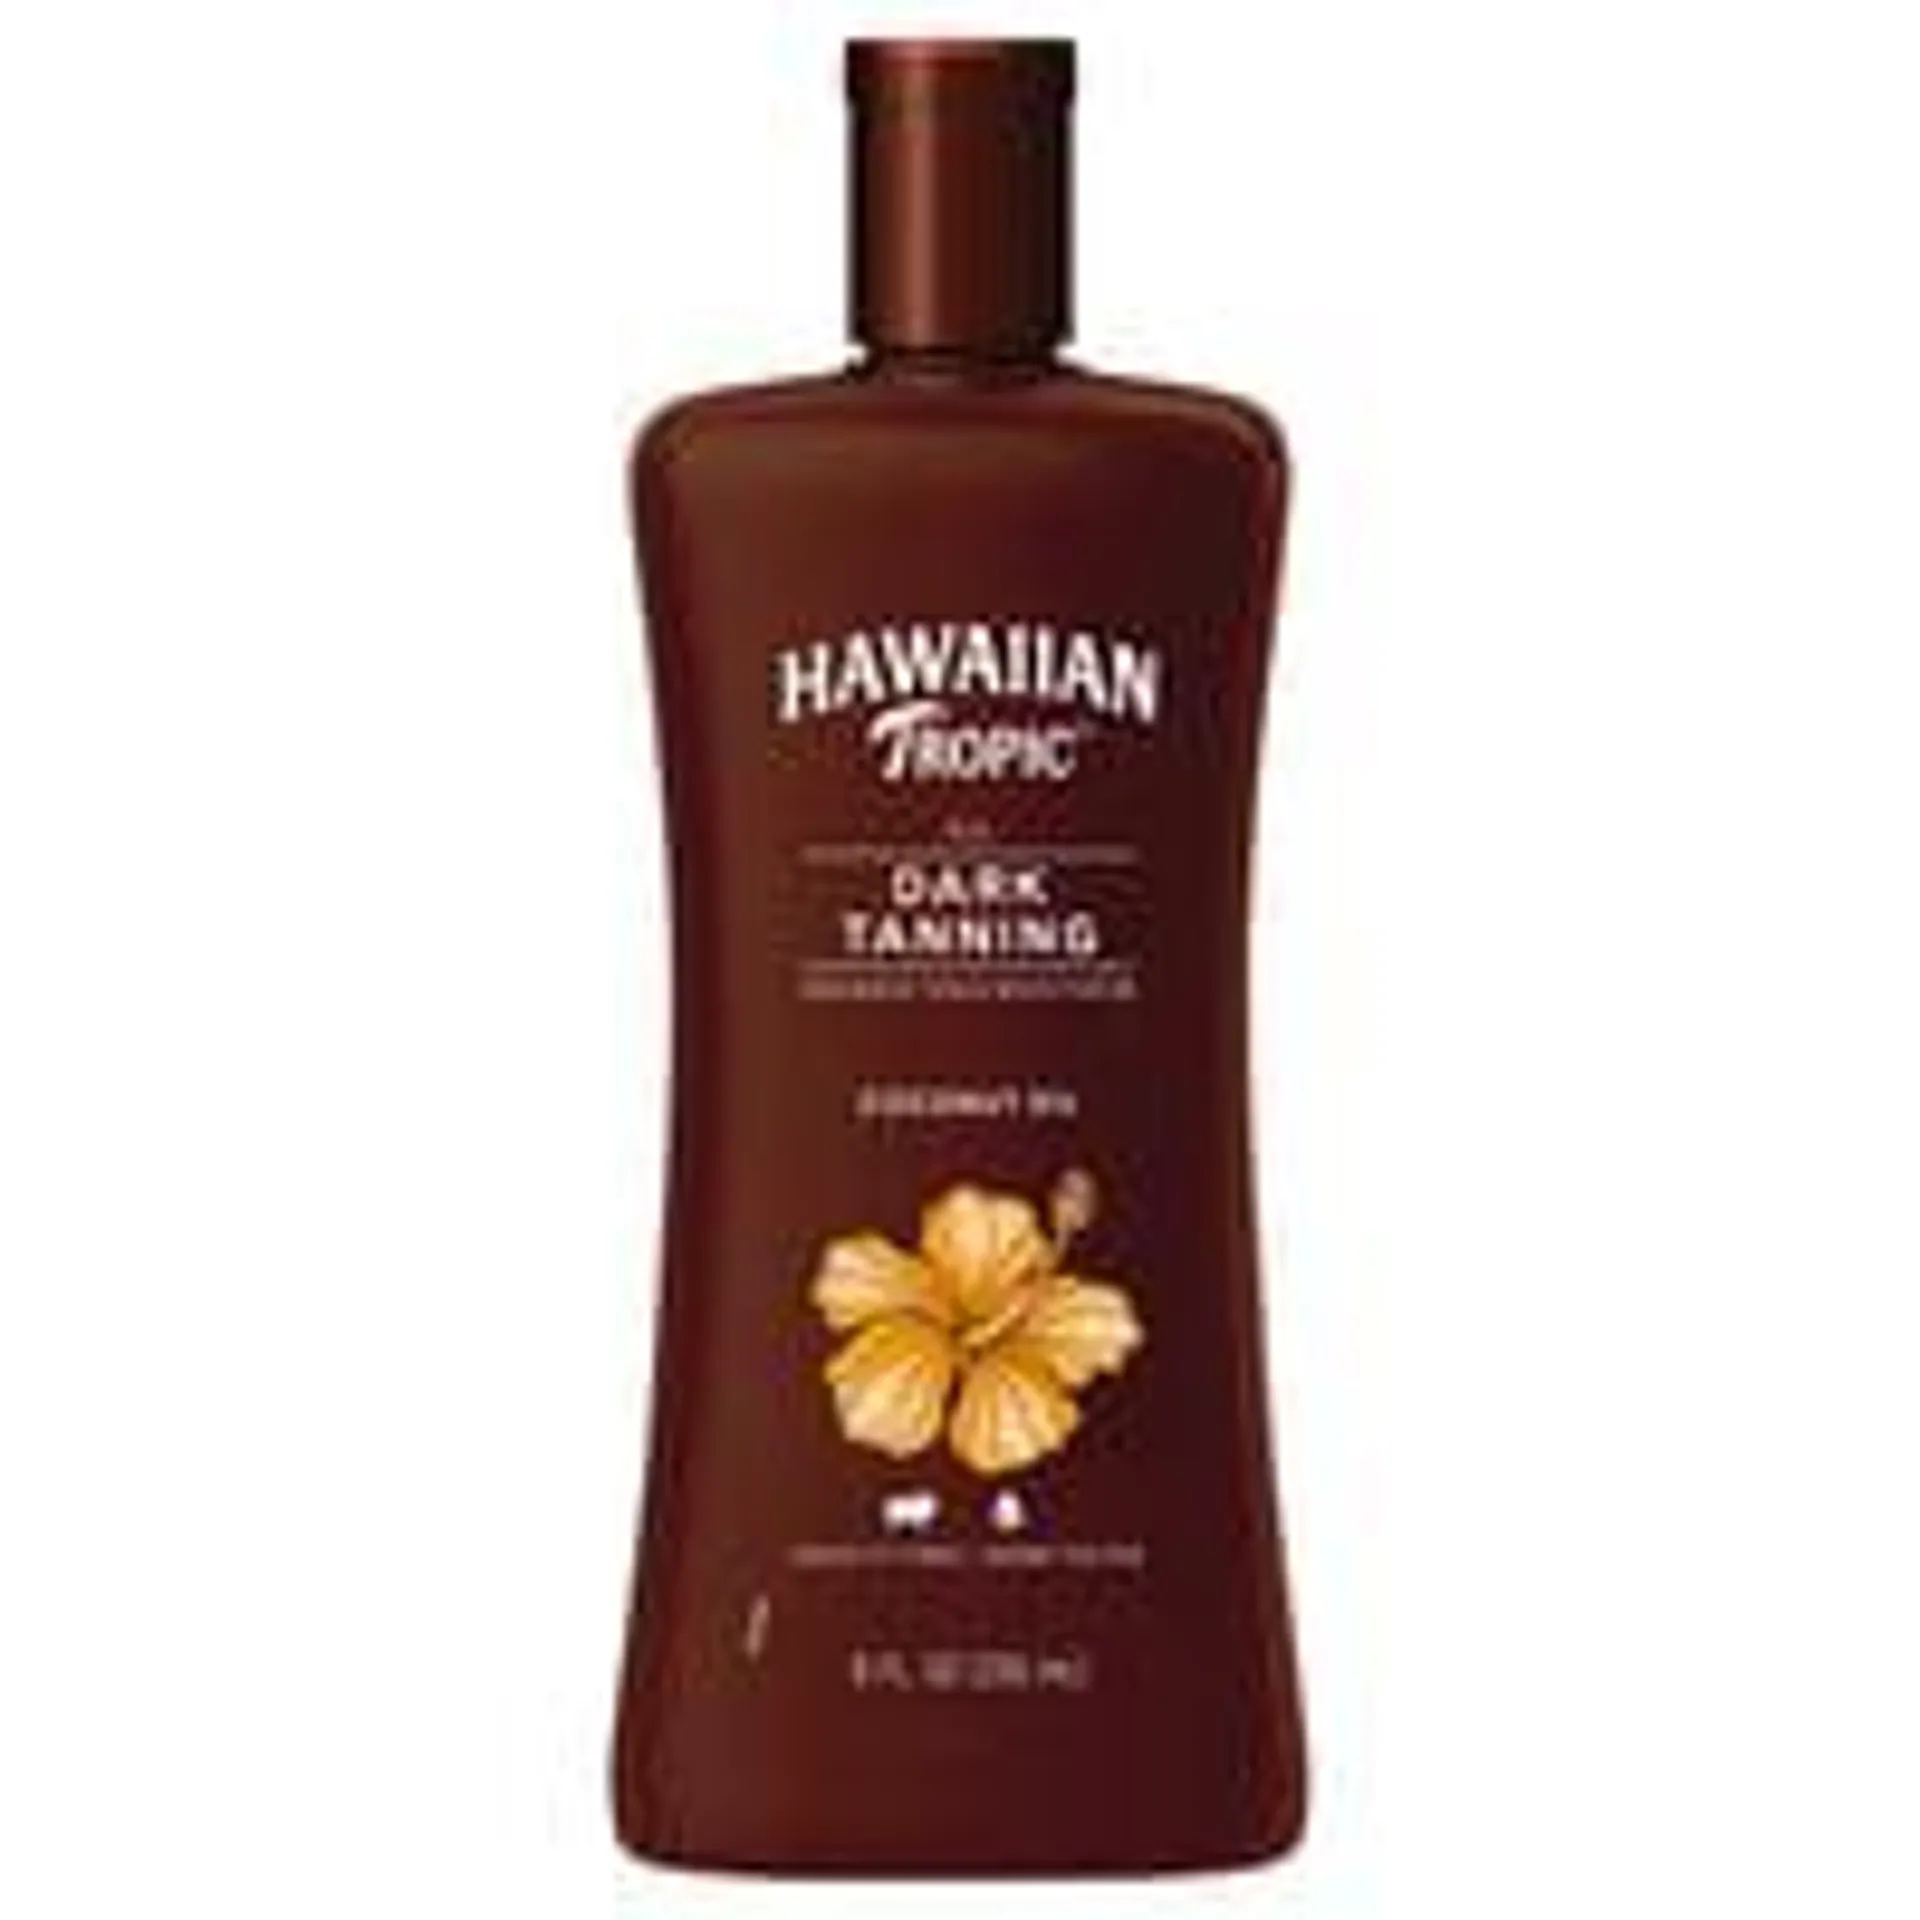 Hawaiian Tropic, Dark Tanning Oil, Coconut Oil